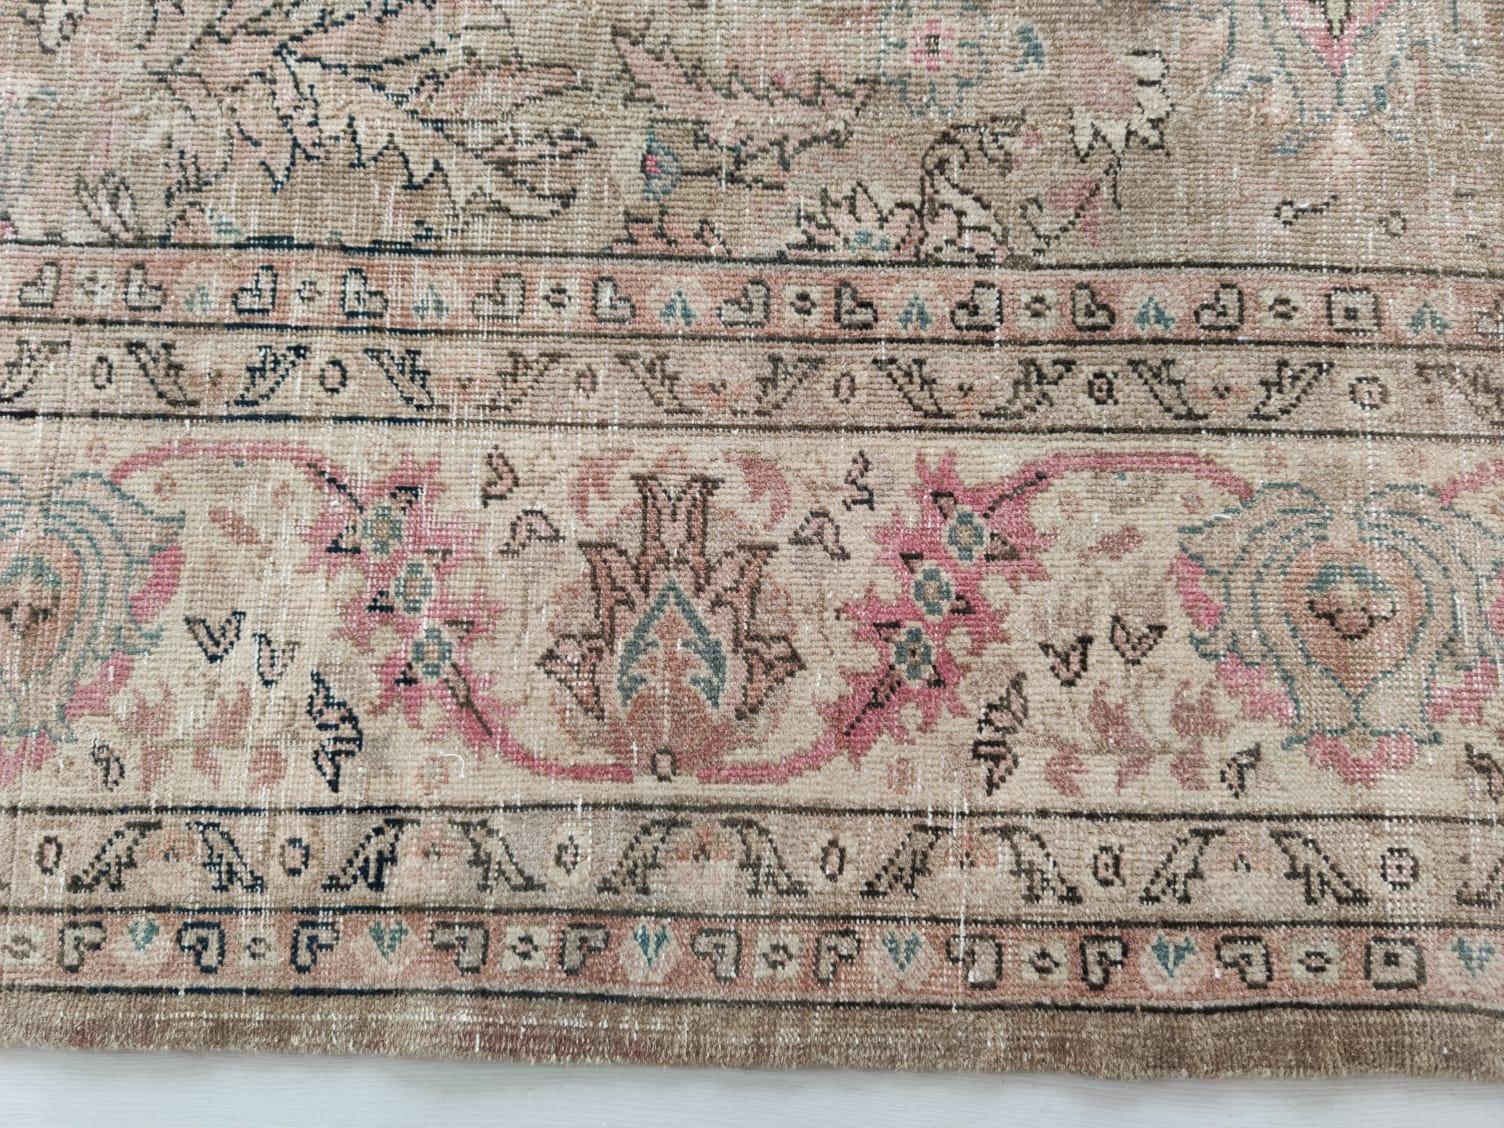 8.5x11 Ft Vintage Handmade Floral Pattern Turkish Wool Area Rug in Tawny Brown 10